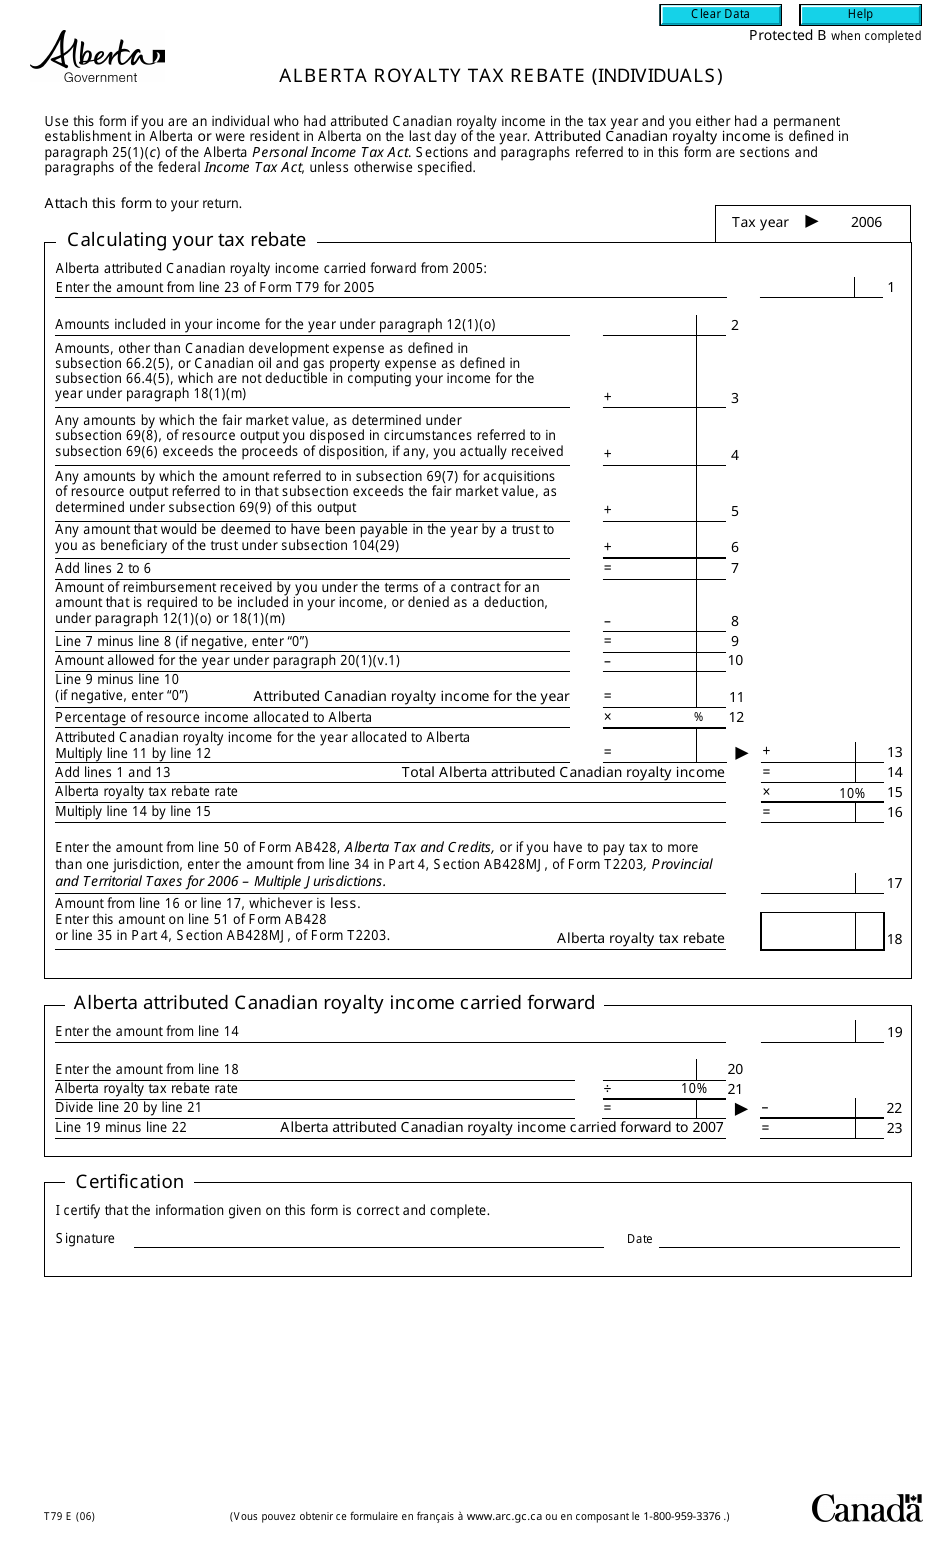 Form T79 Alberta Royalty Tax Rebate (Individuals) - Canada, Page 1